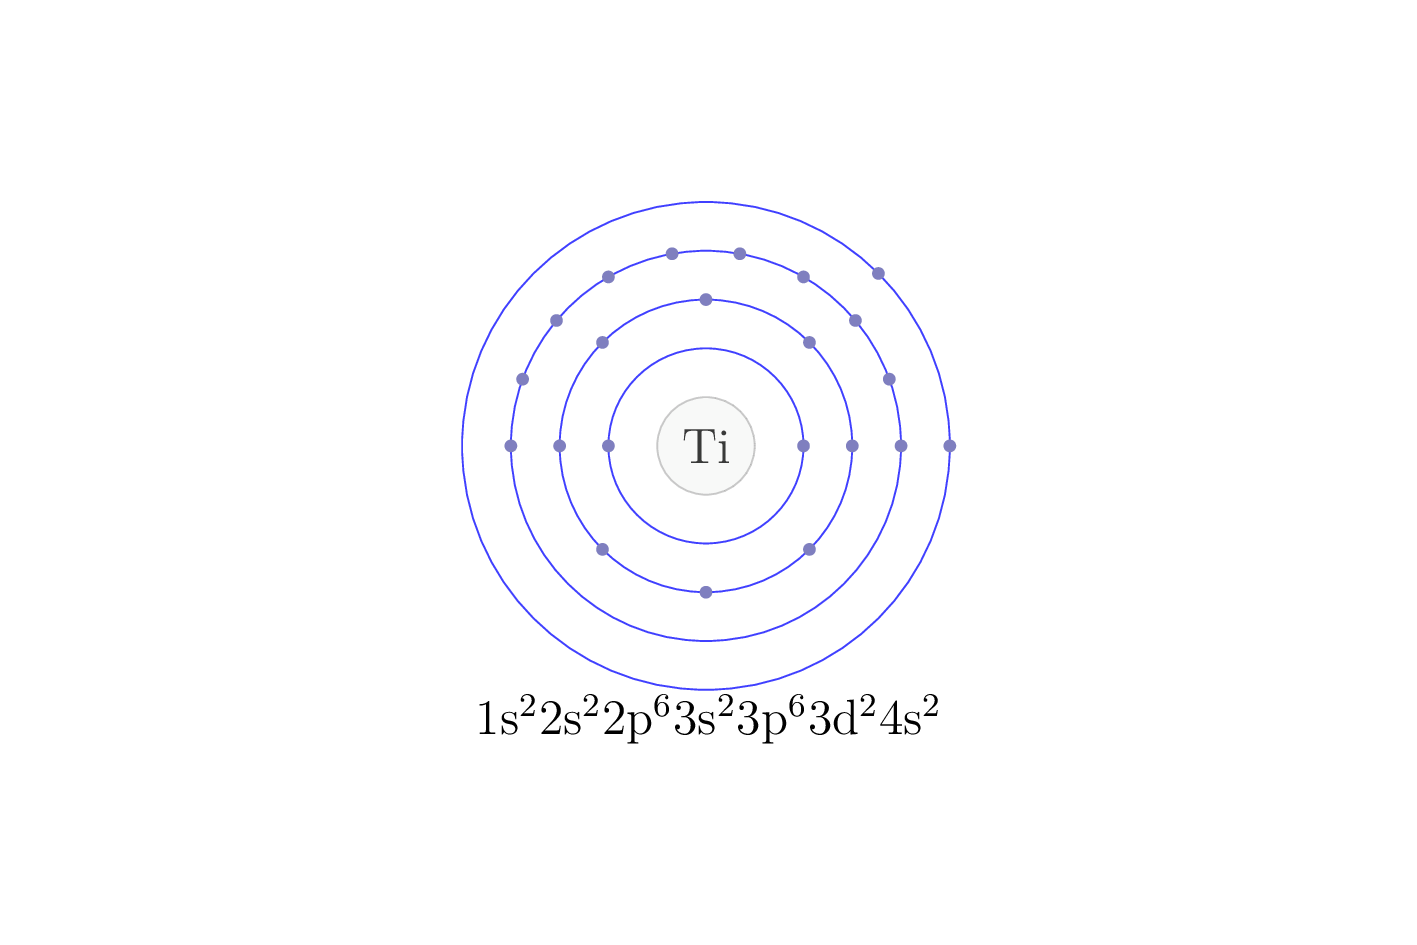 electron configuration of element Ti